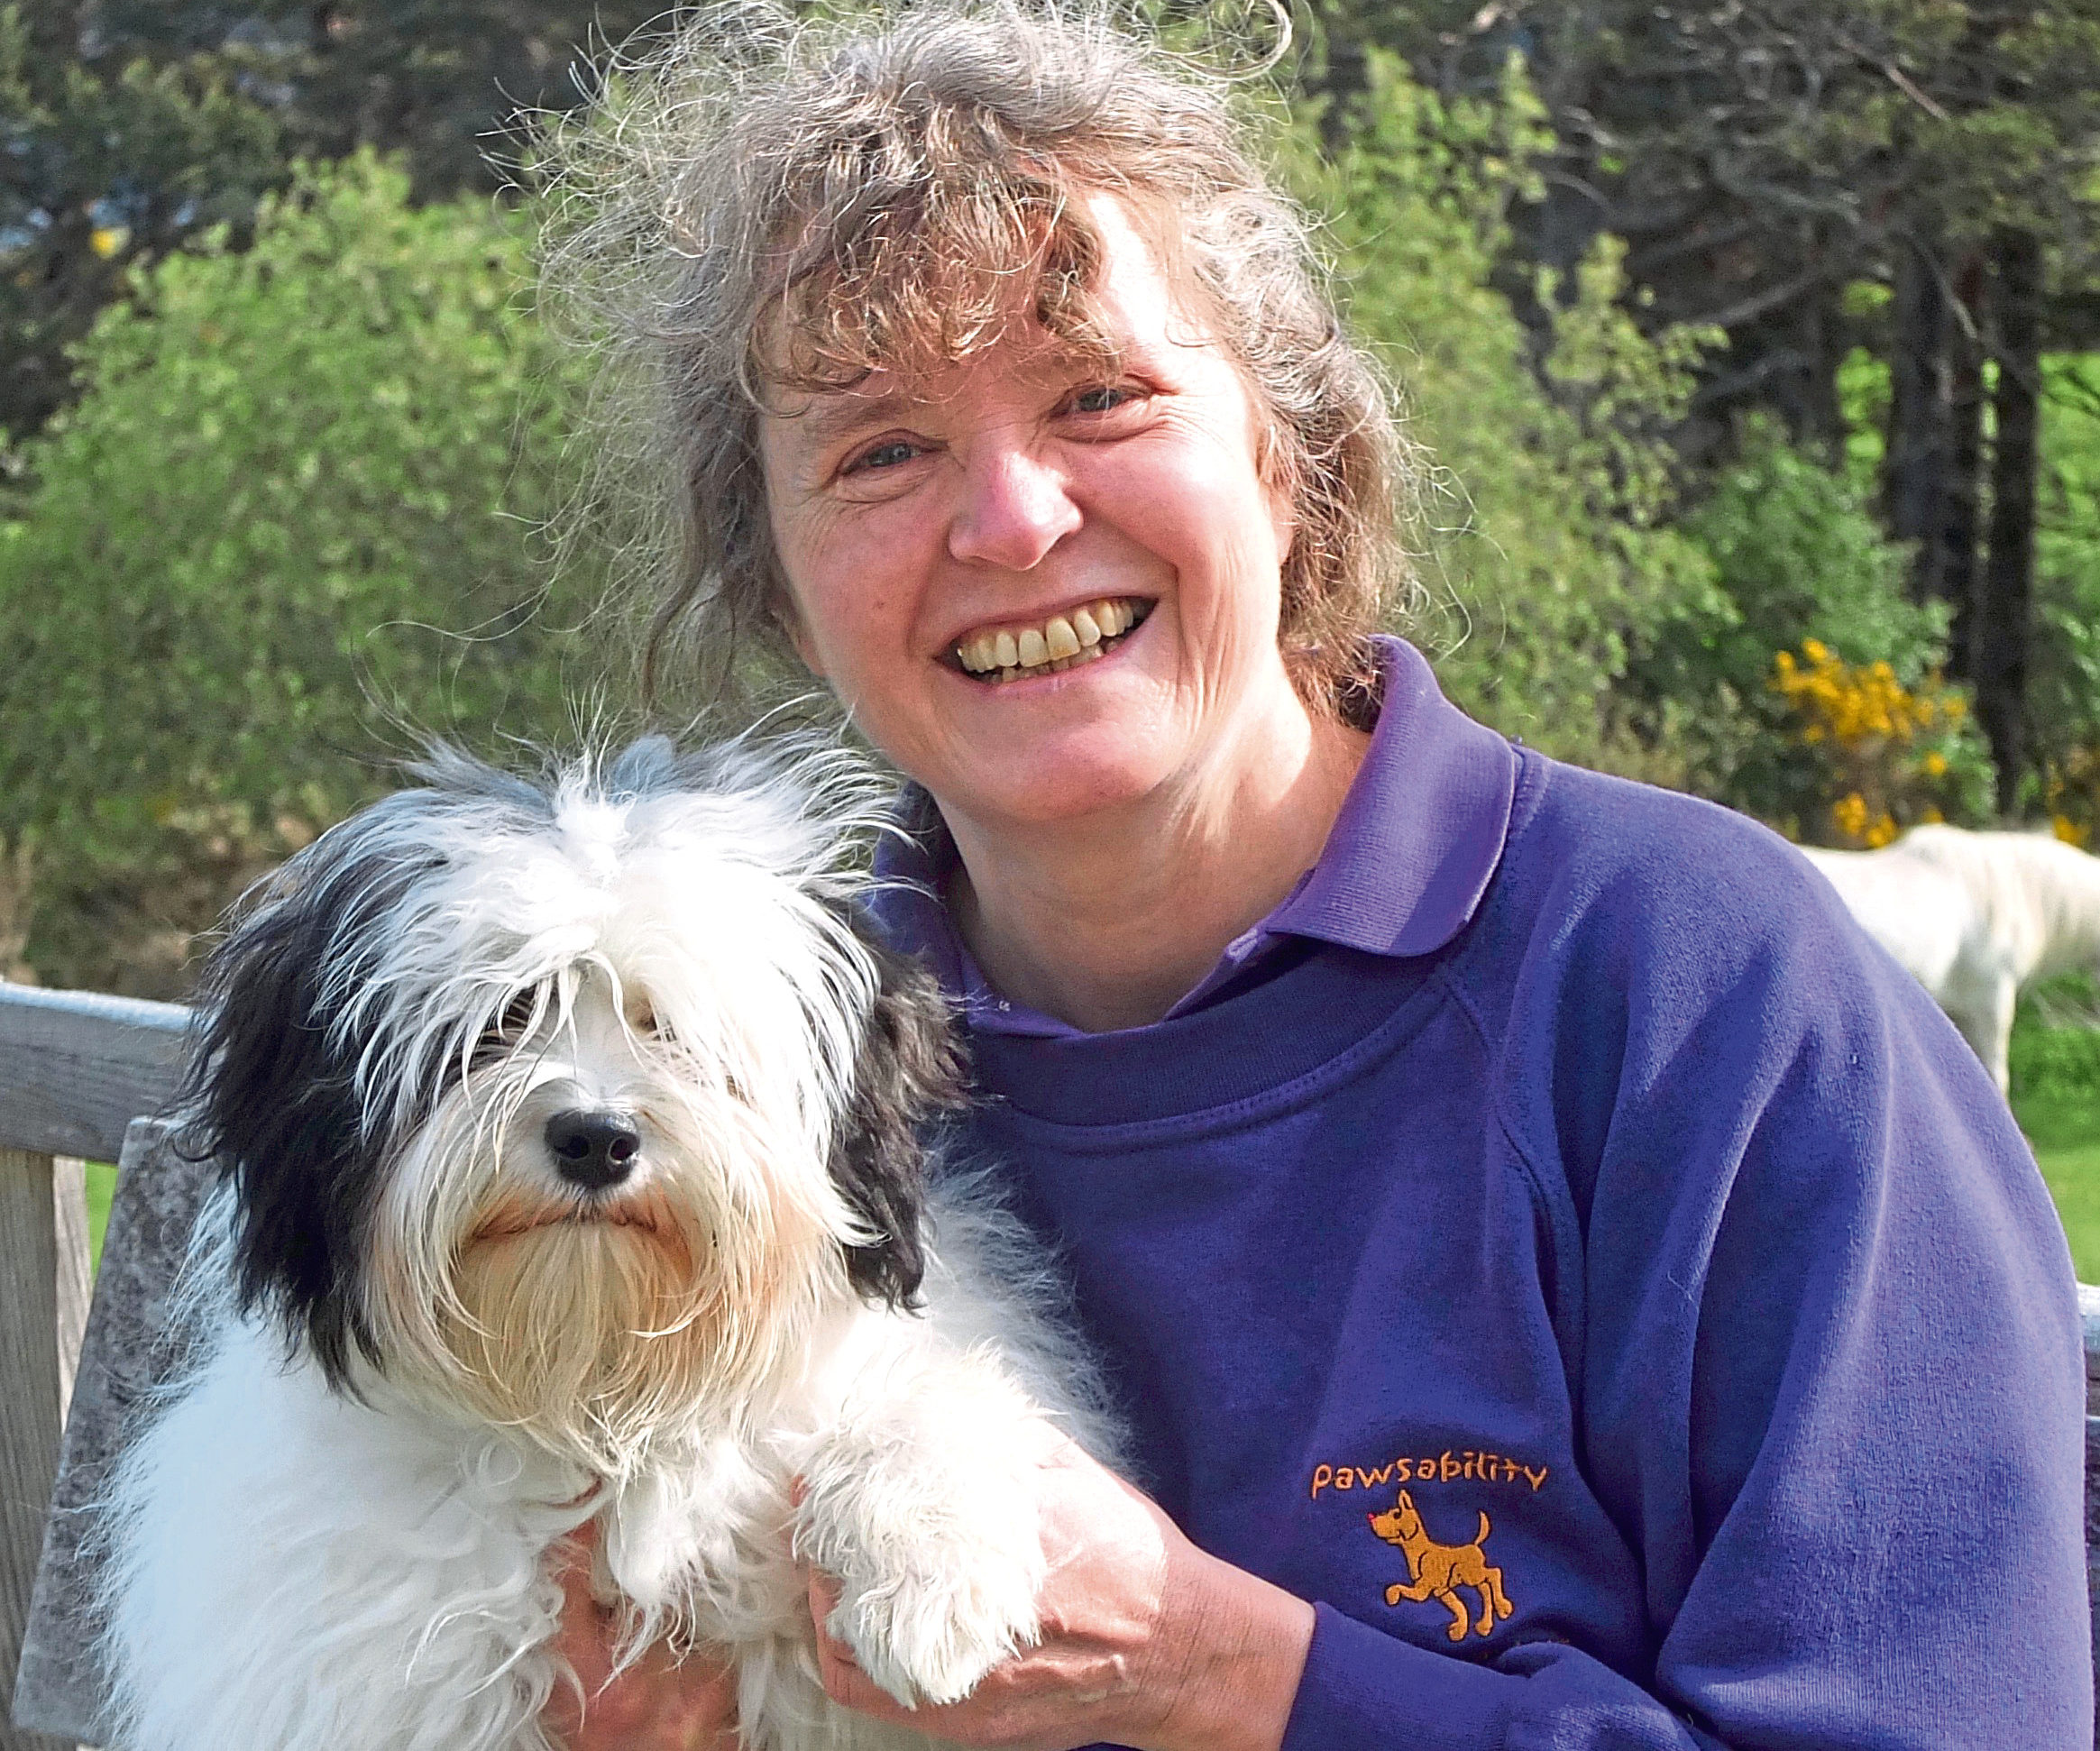 Anna Patfield, who runs Pawsability in Ardgay, Sutherland